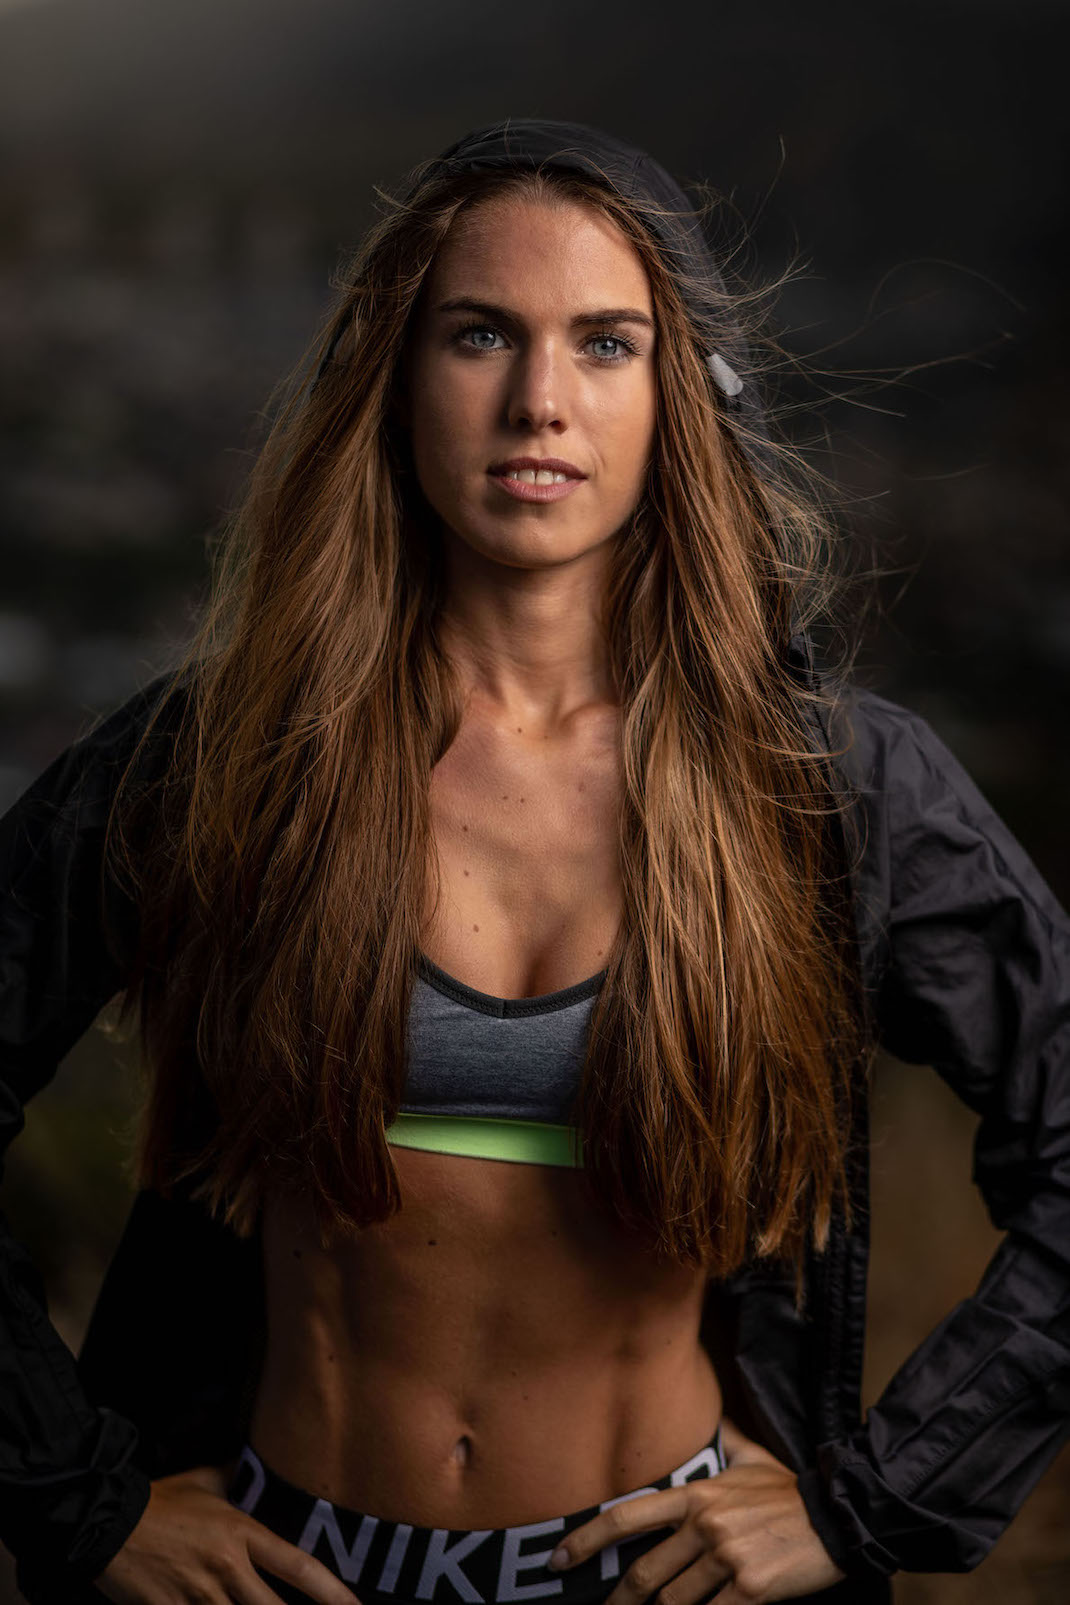 Hannah Samira Schmidt fitness test shoot, photos by Dwayne Senior